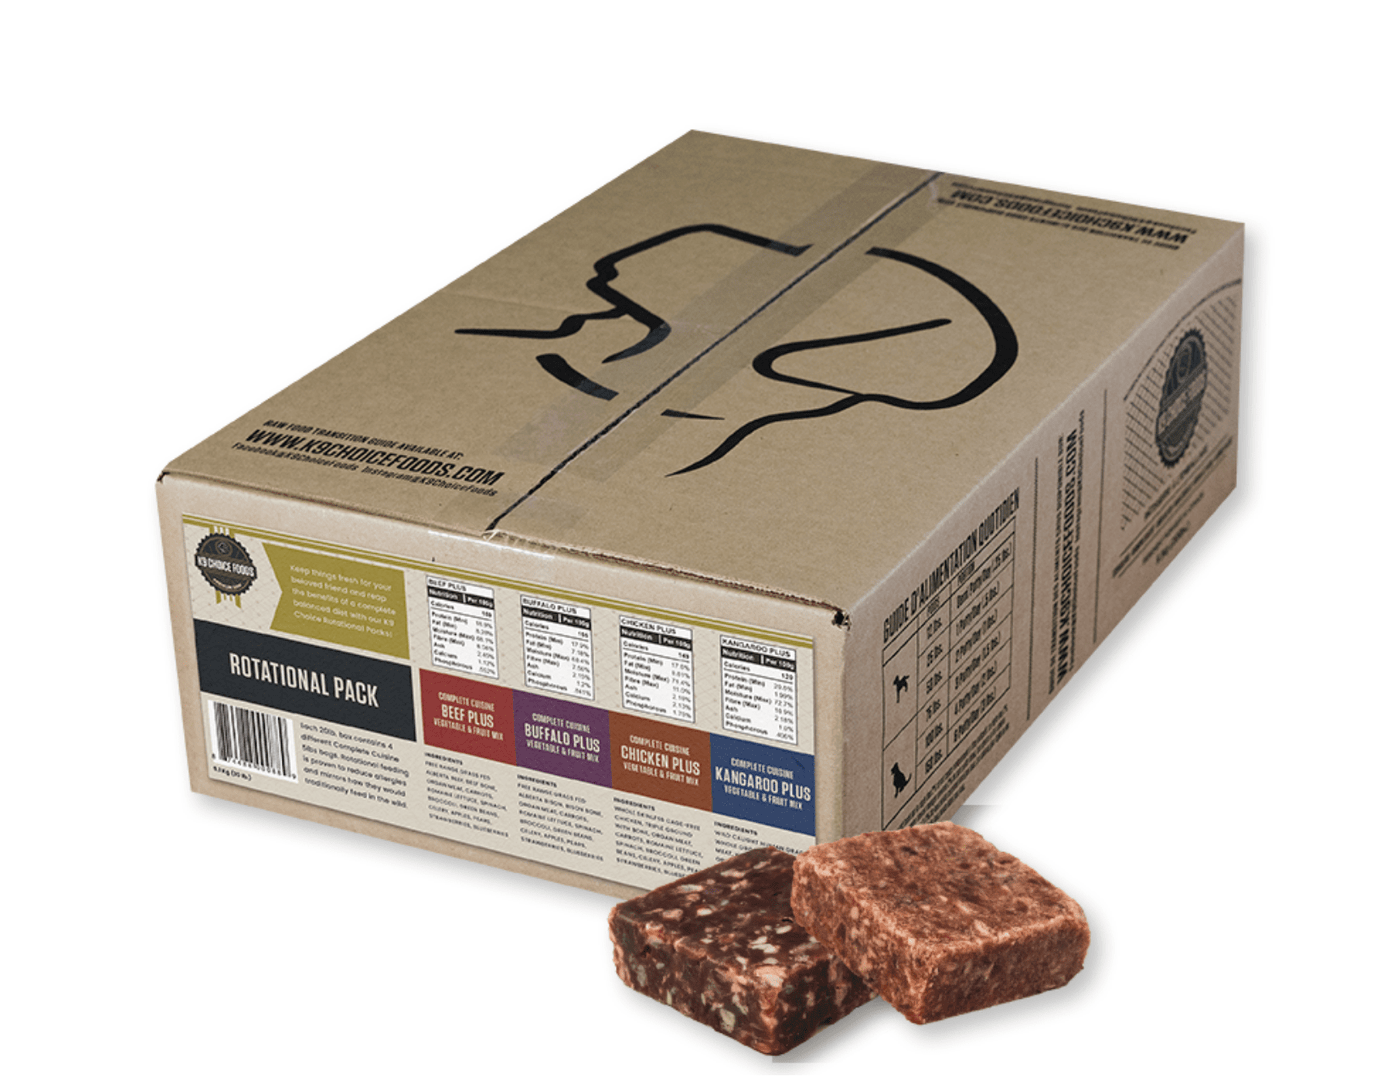 K9 Choice - Rotational Pack 9.1kg/20lb - Frozen Raw Dog Food - PetToba-K9 Choice Foods